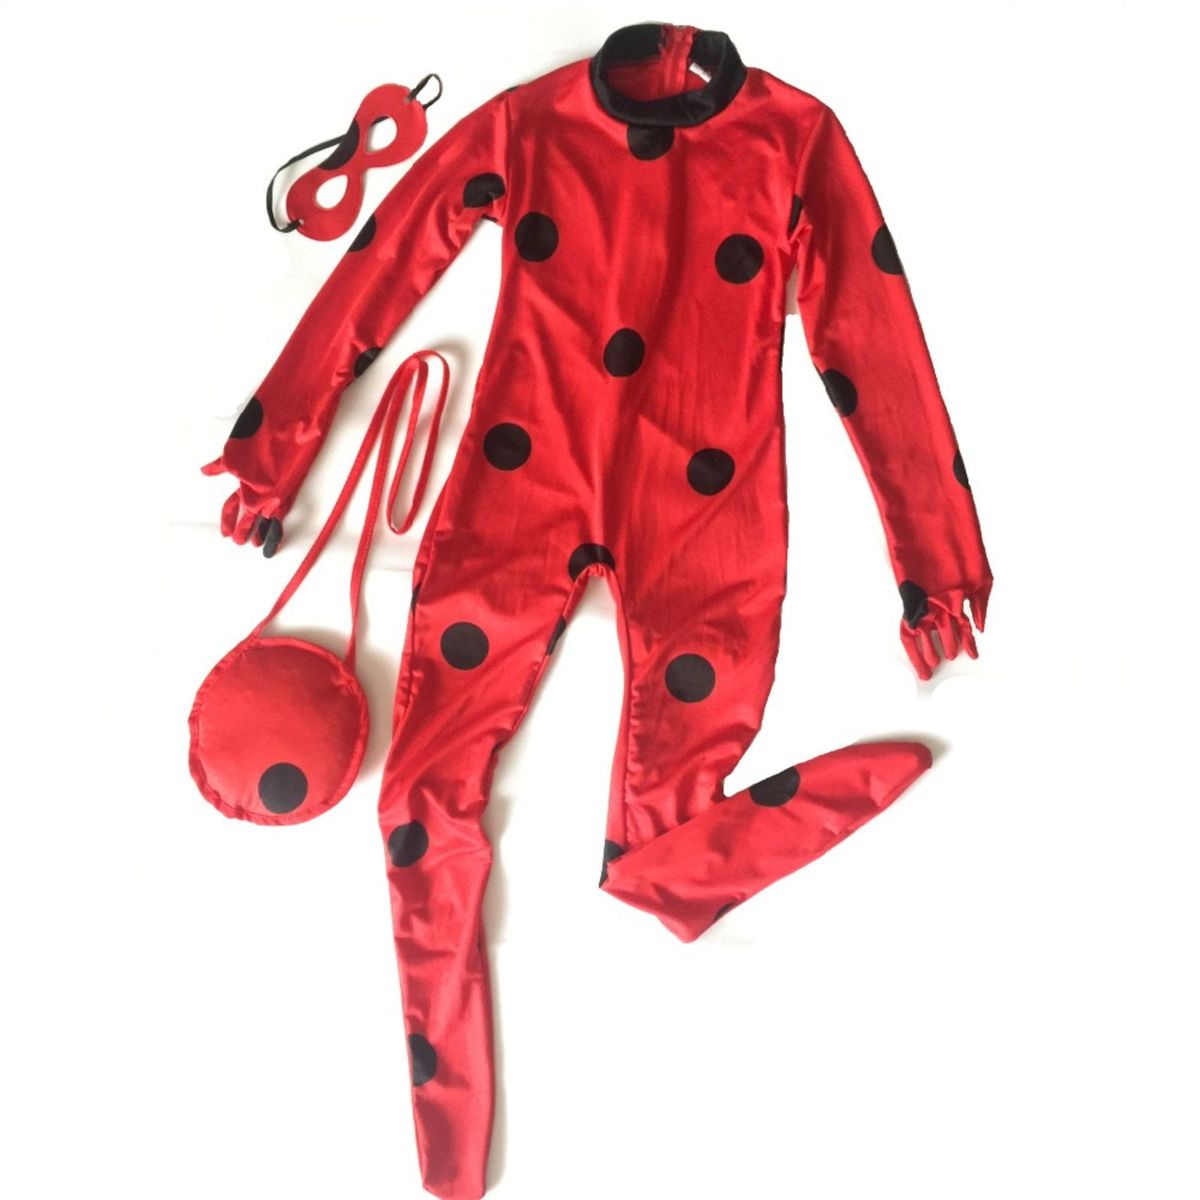 roupas infantil ladybug